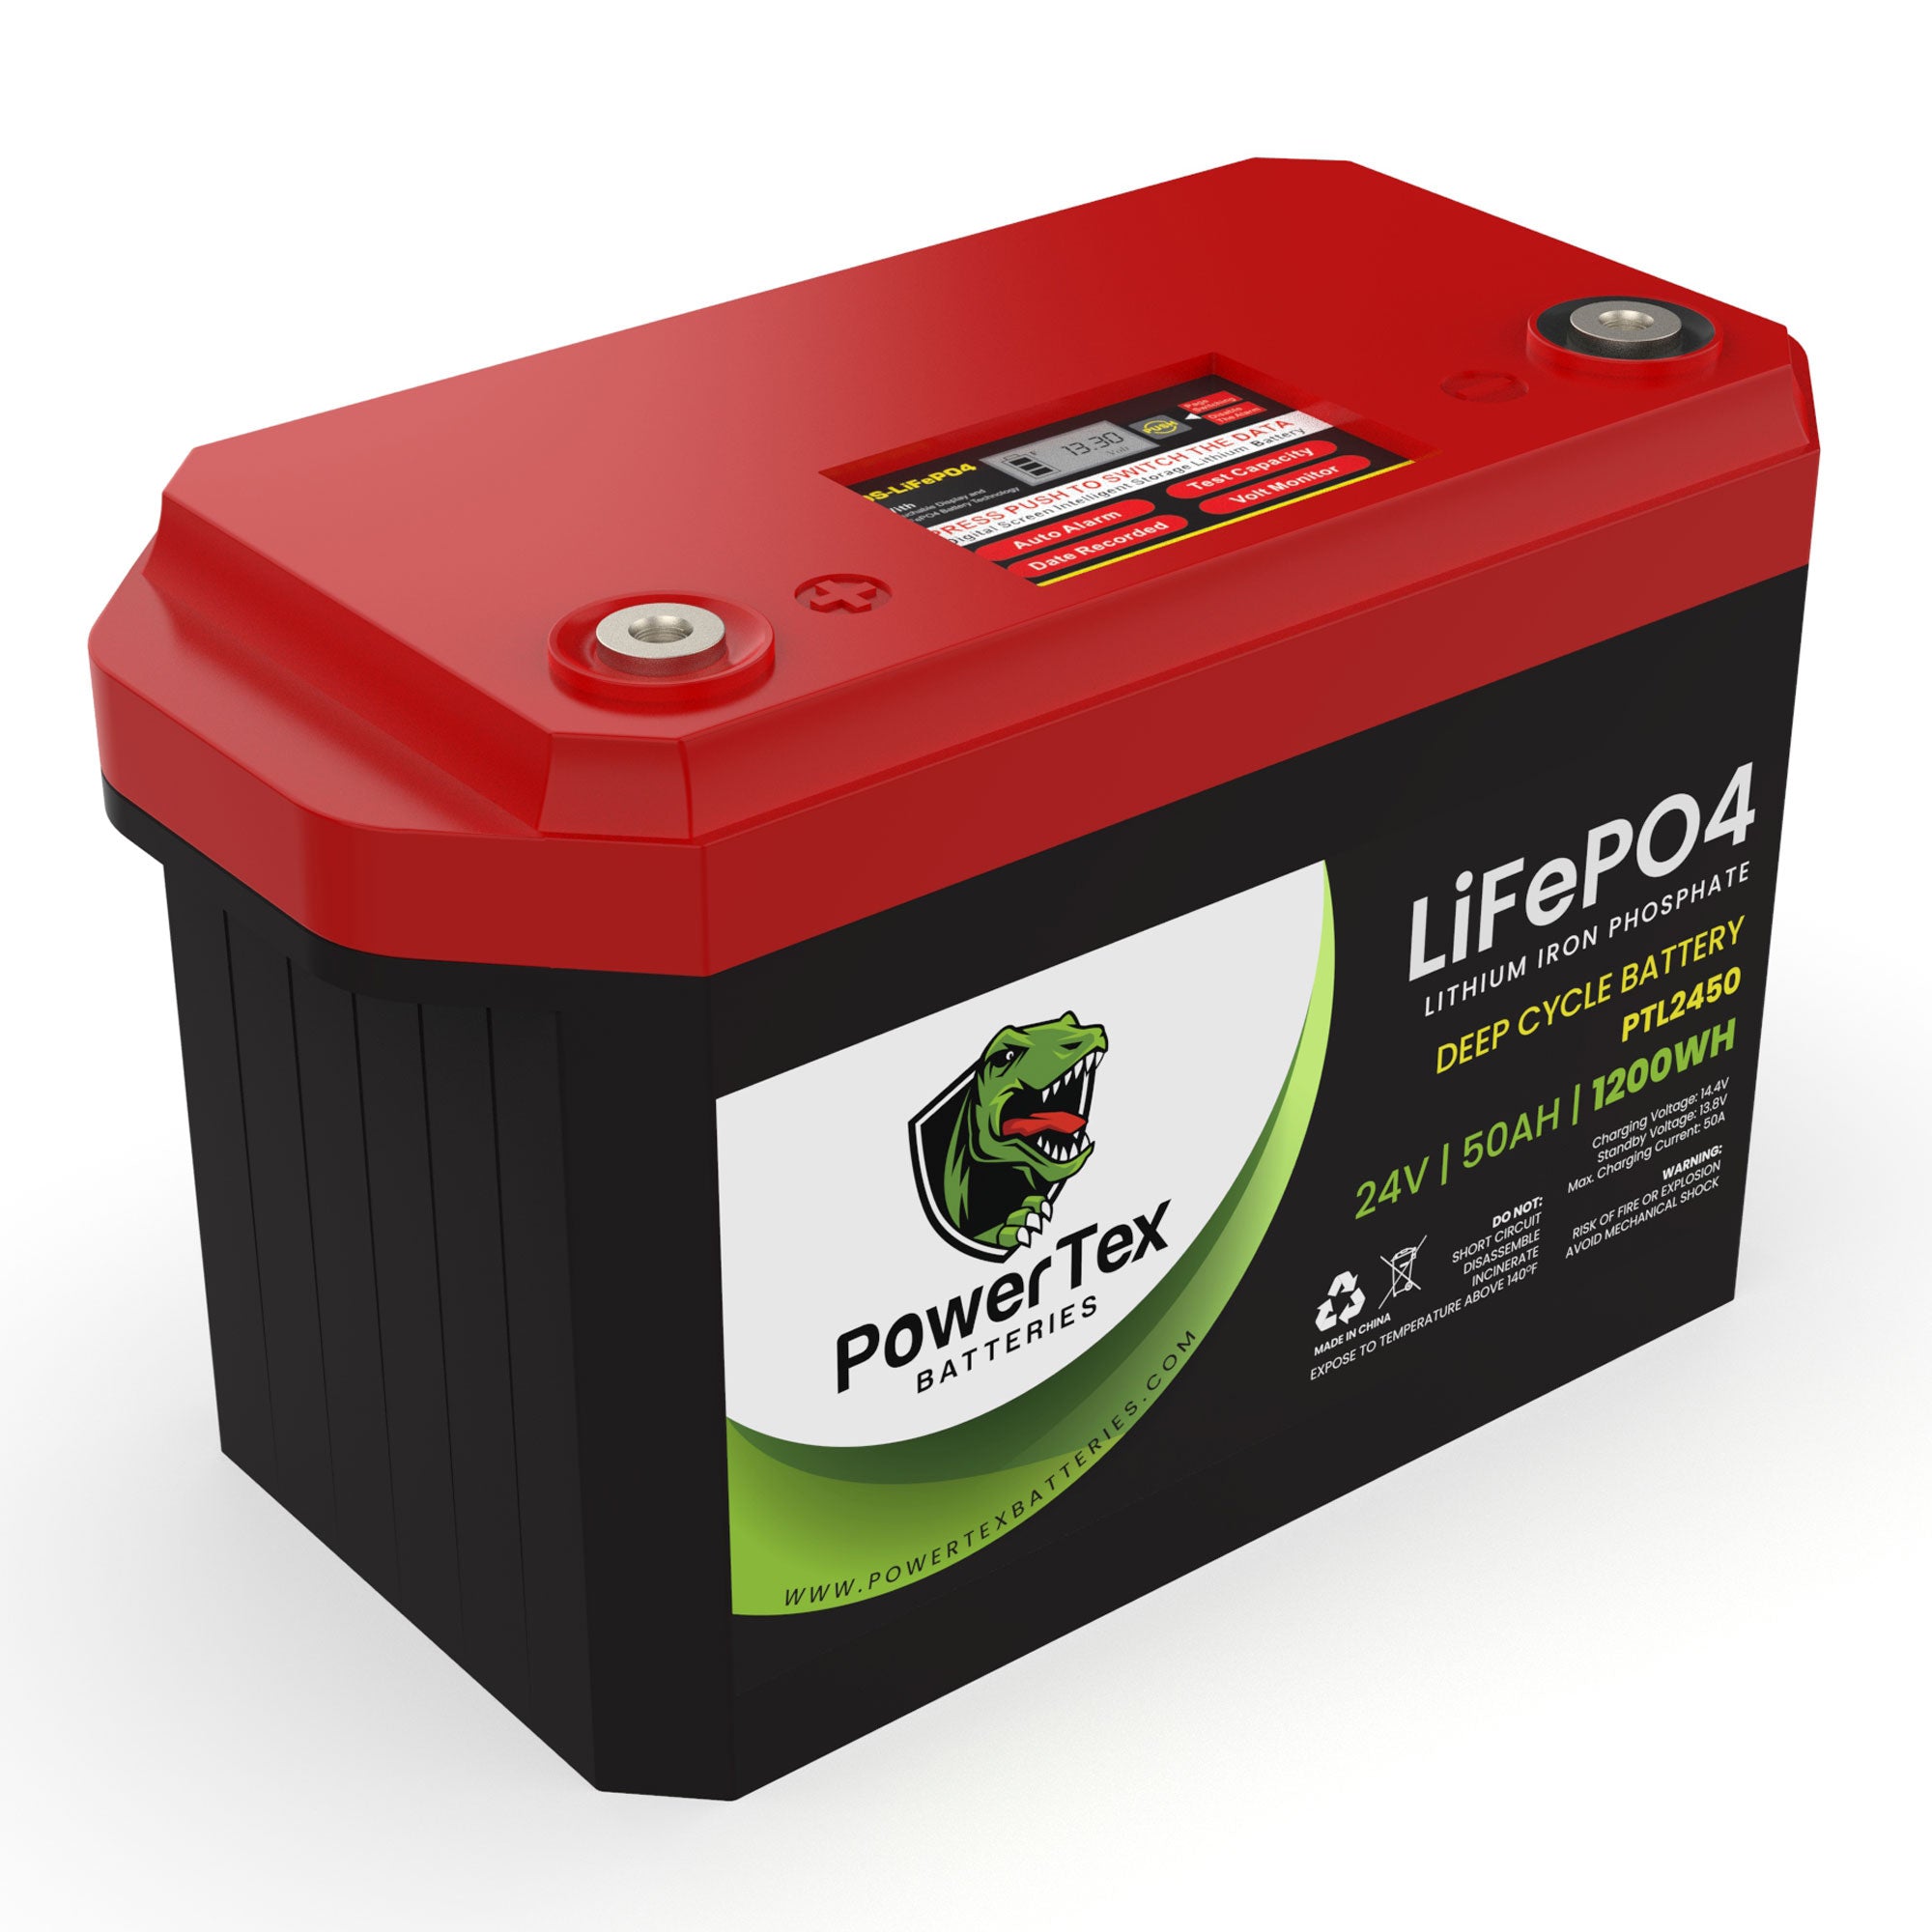 Powertex 24V 50Ah Lithium Trolling Battery For MotorGuide Tour Pro